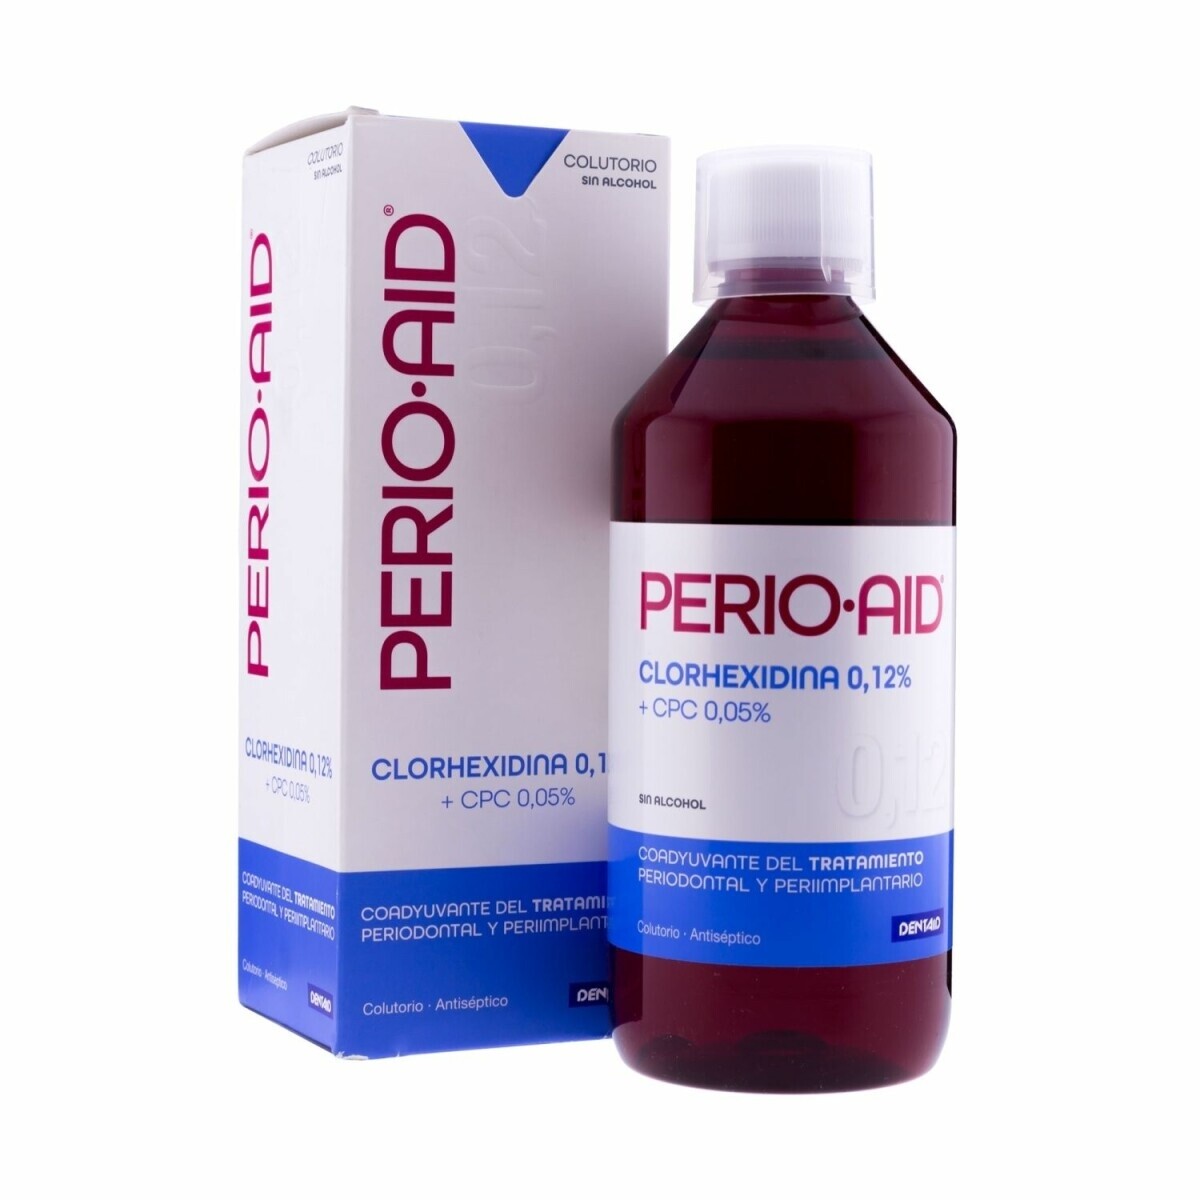 Vitis Enjuague Perioaid Clorehexidina 0,12% 150 ml 